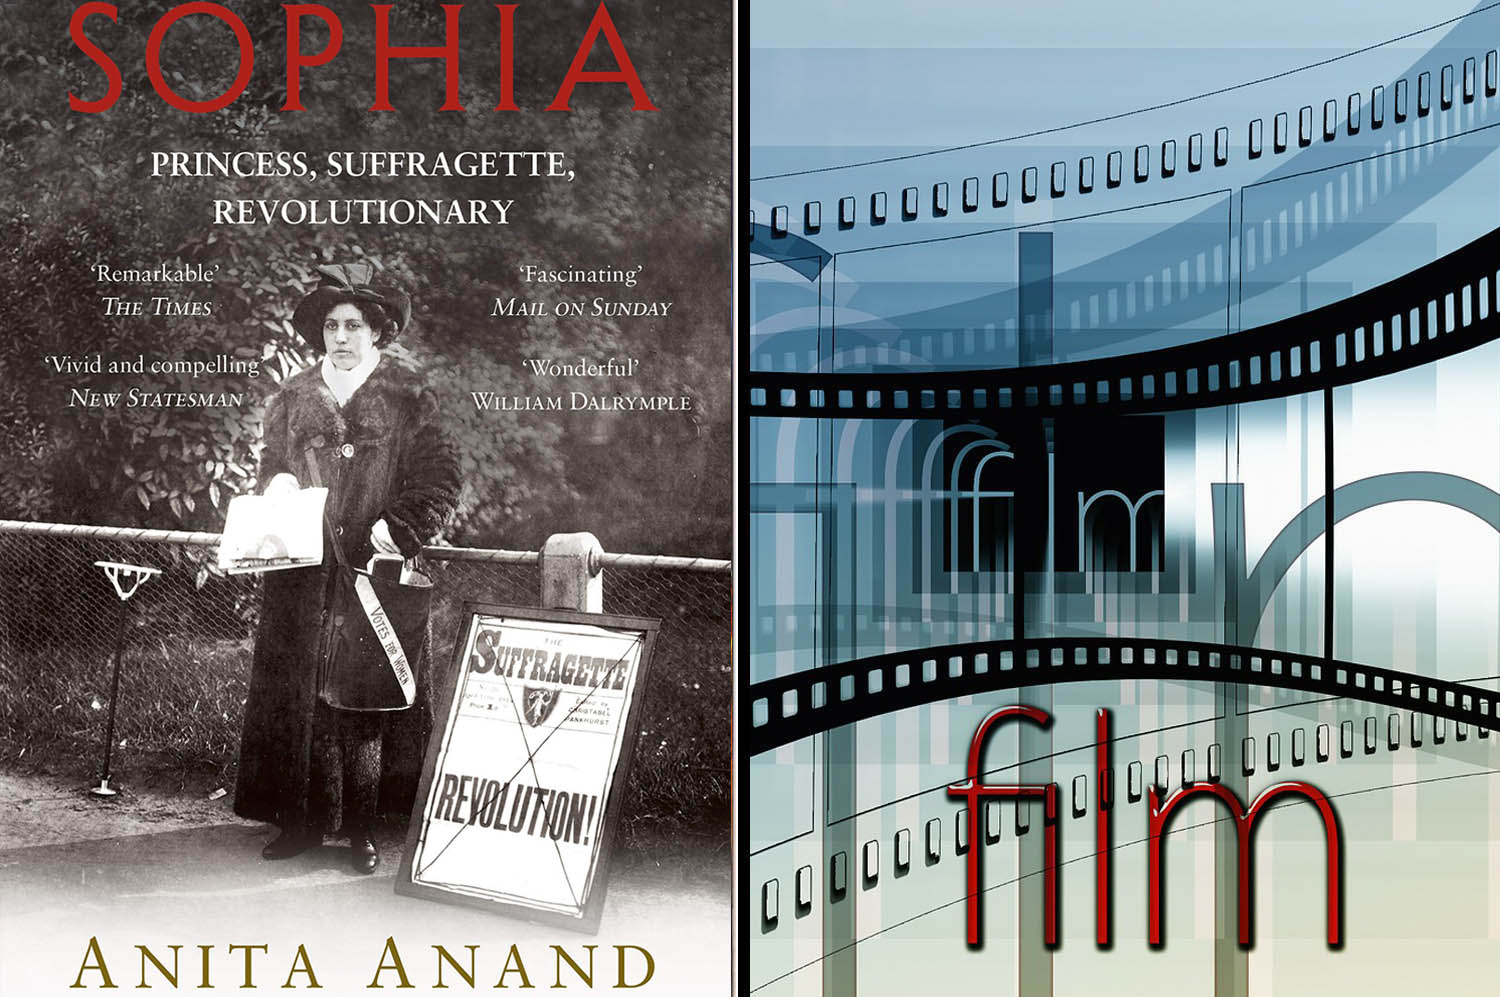 Sophia Princess, Suffragette, Revolutionary-film